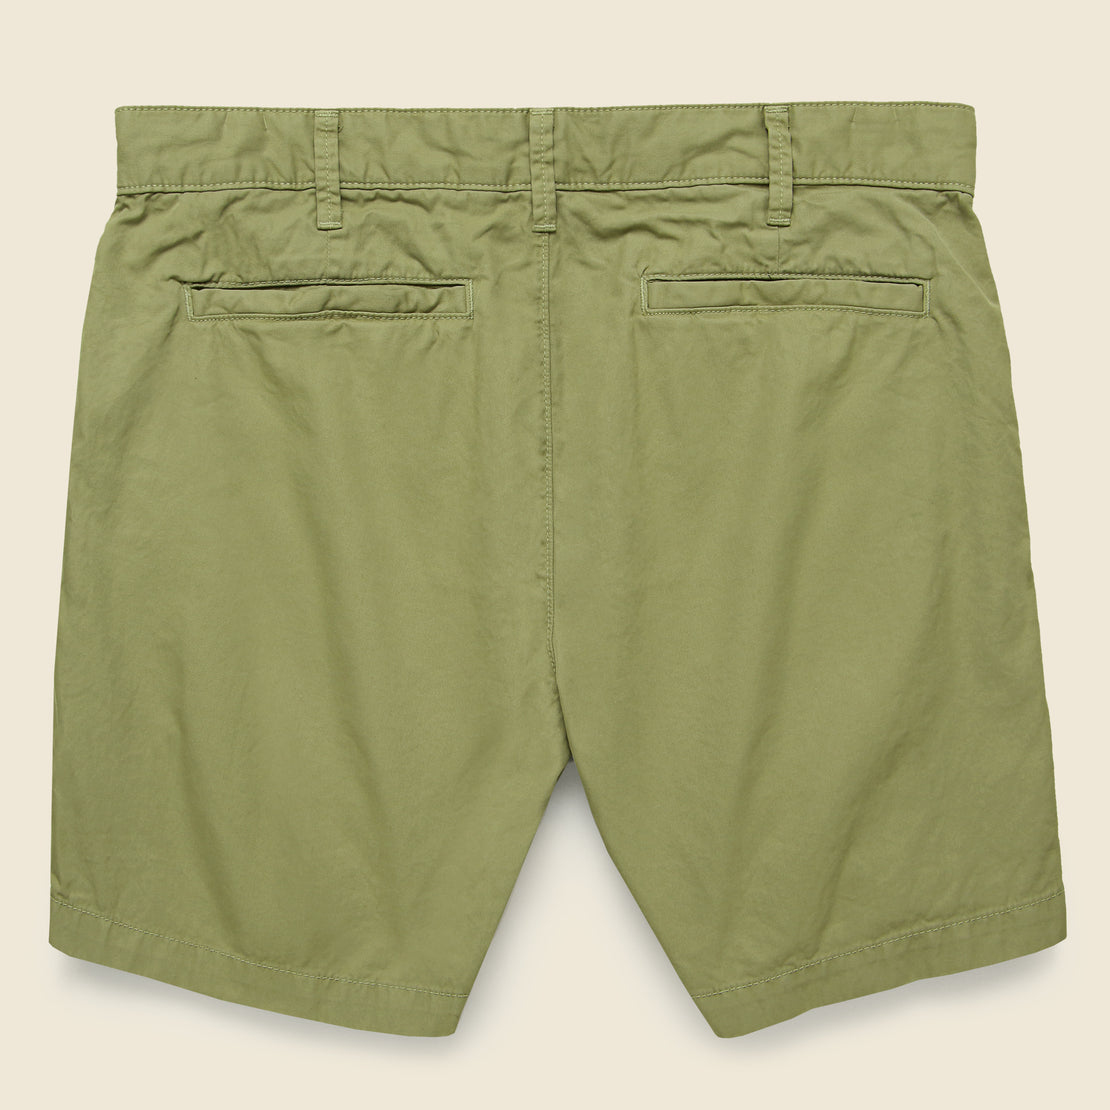 6-inch Bermuda Short - Olive Drab - Save Khaki - STAG Provisions - Shorts - Solid